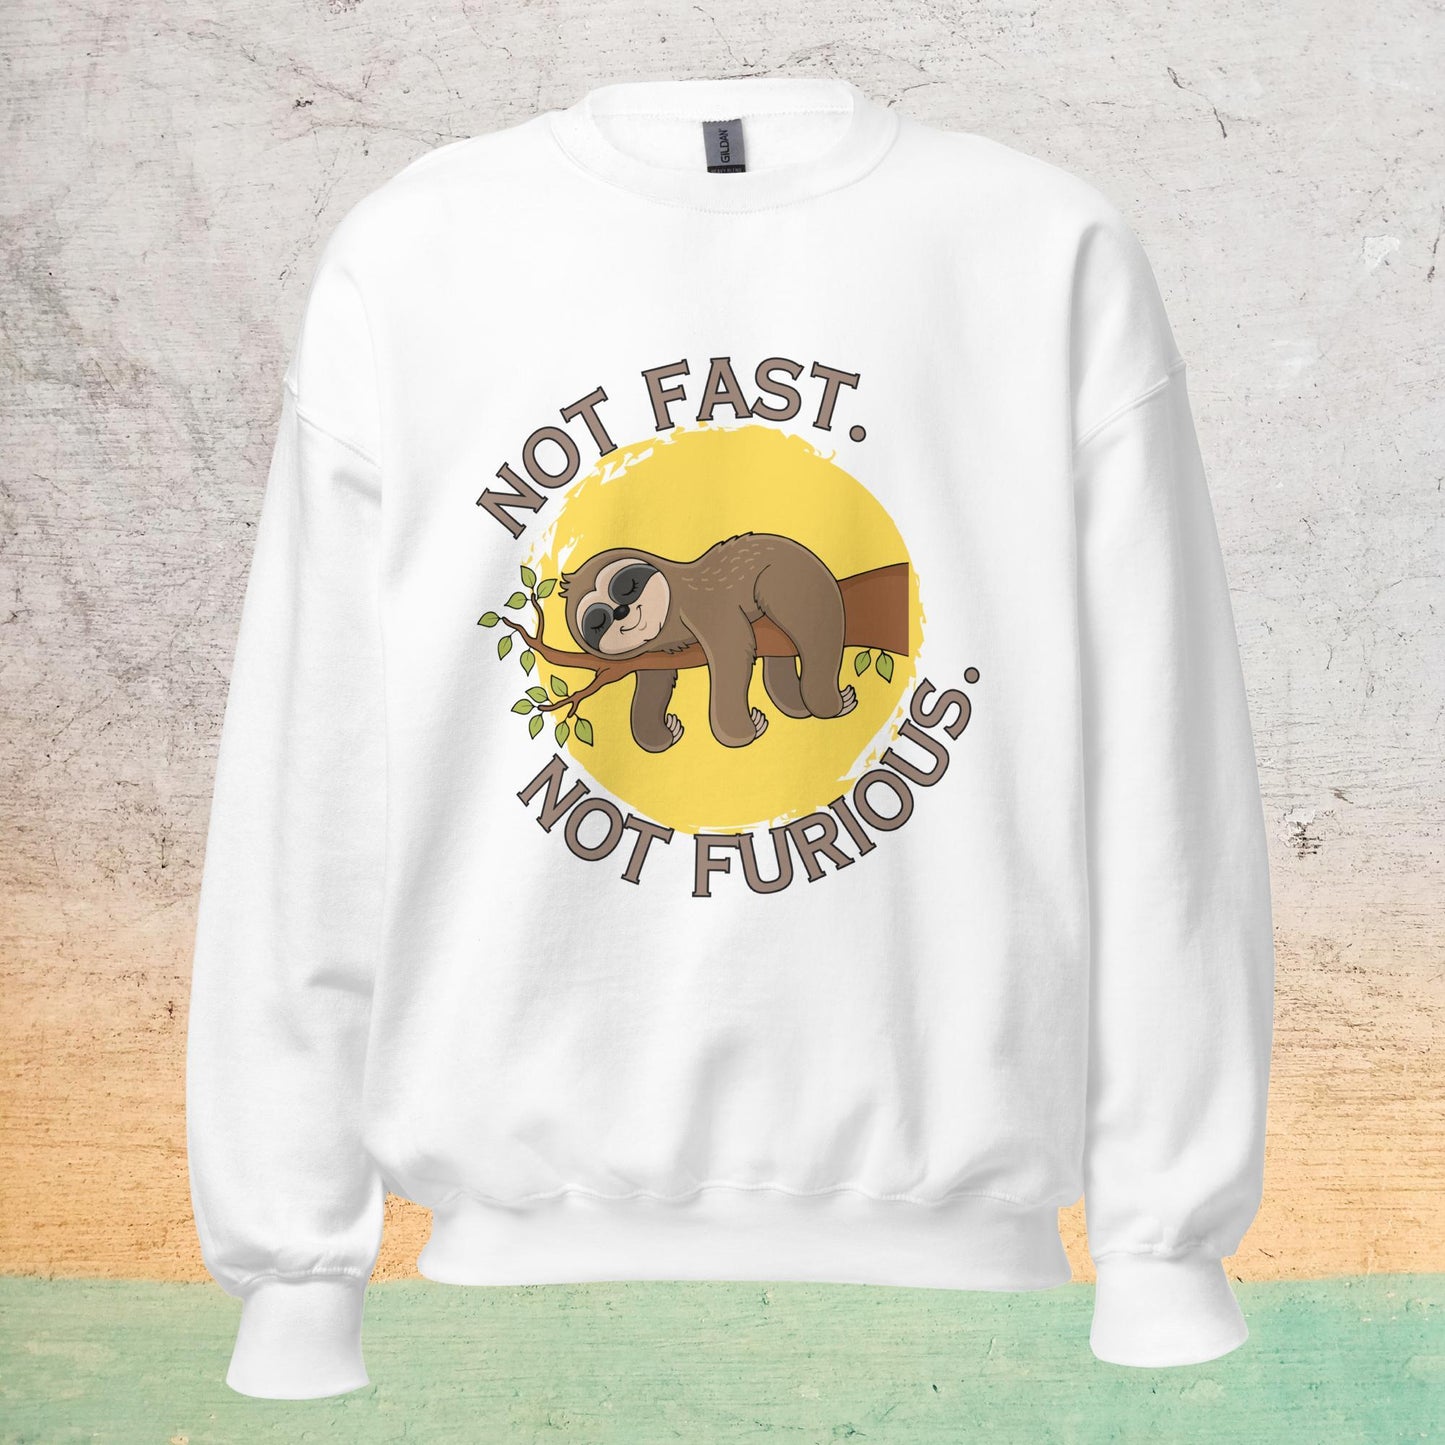 Essential Crew Sweatshirt - Not Fast Not Furious